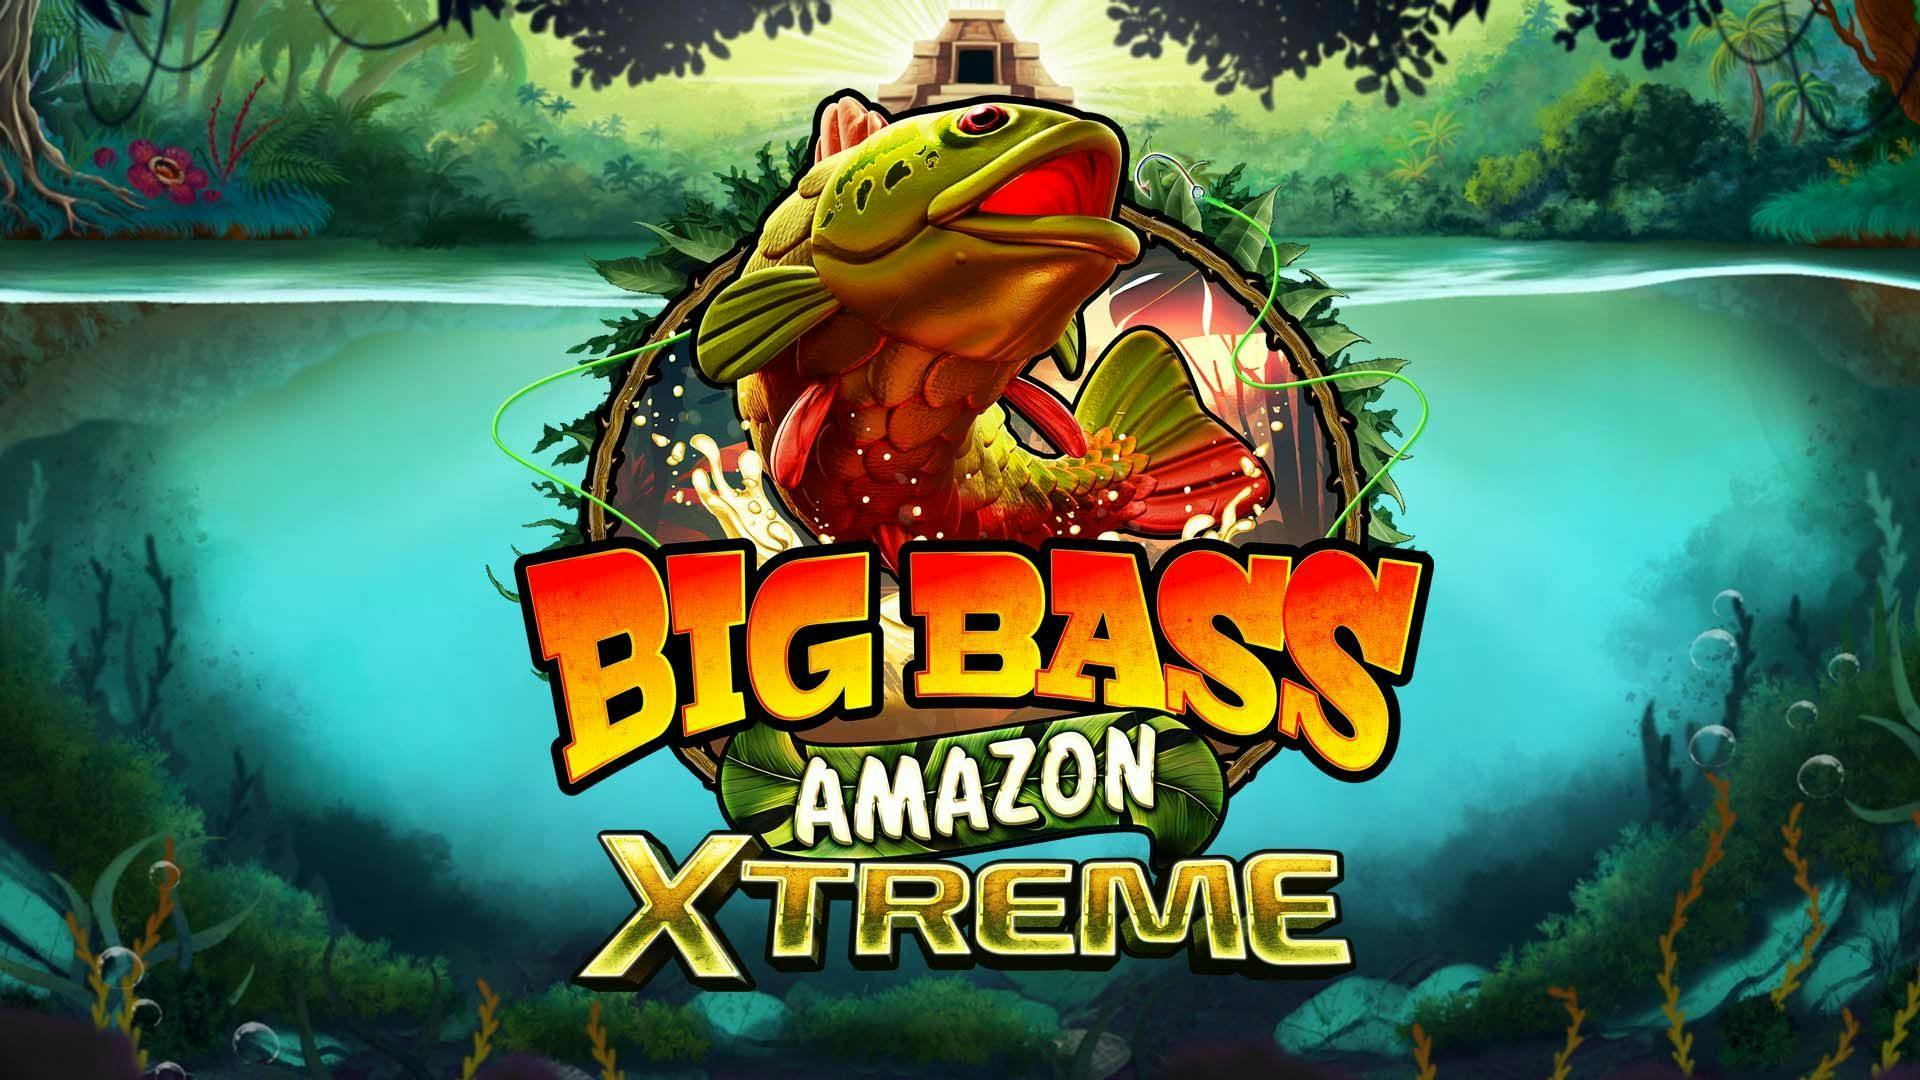 Big Bass Amazon Xtreme Slot Machine Online Free Game Play